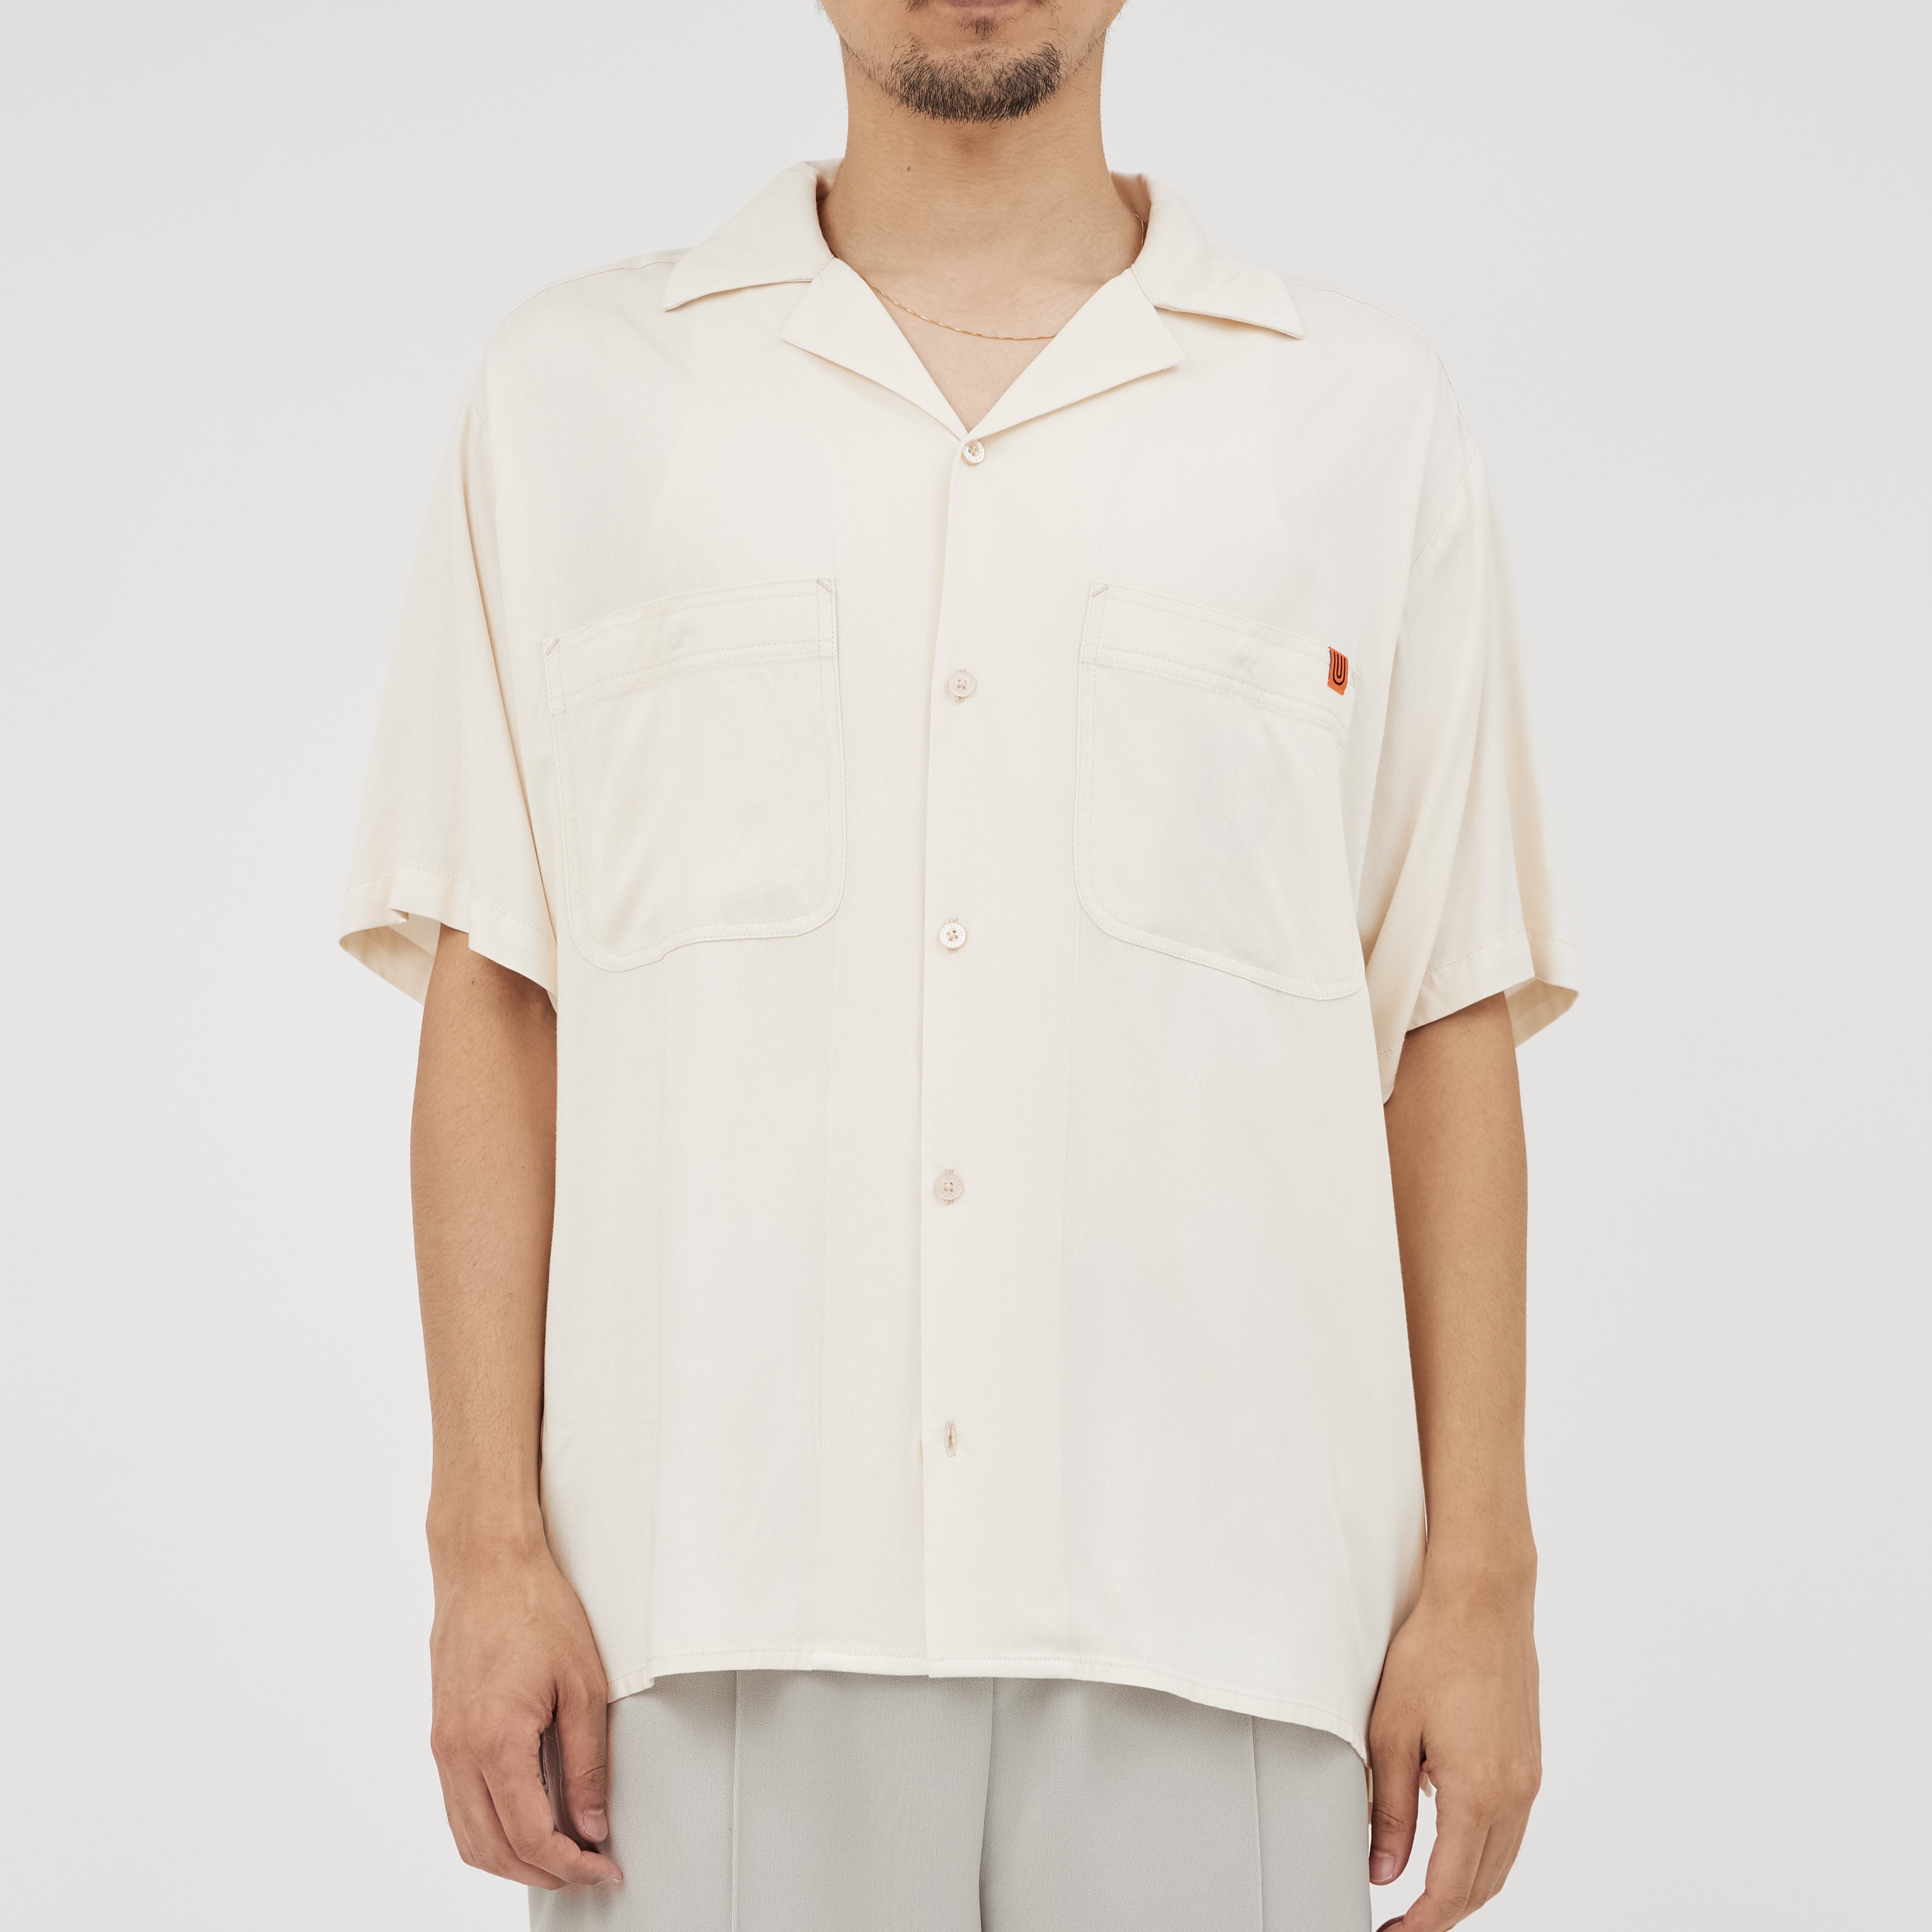 OPEN COLLAR SHIRT (オープンカラーシャツ)【U2313155】